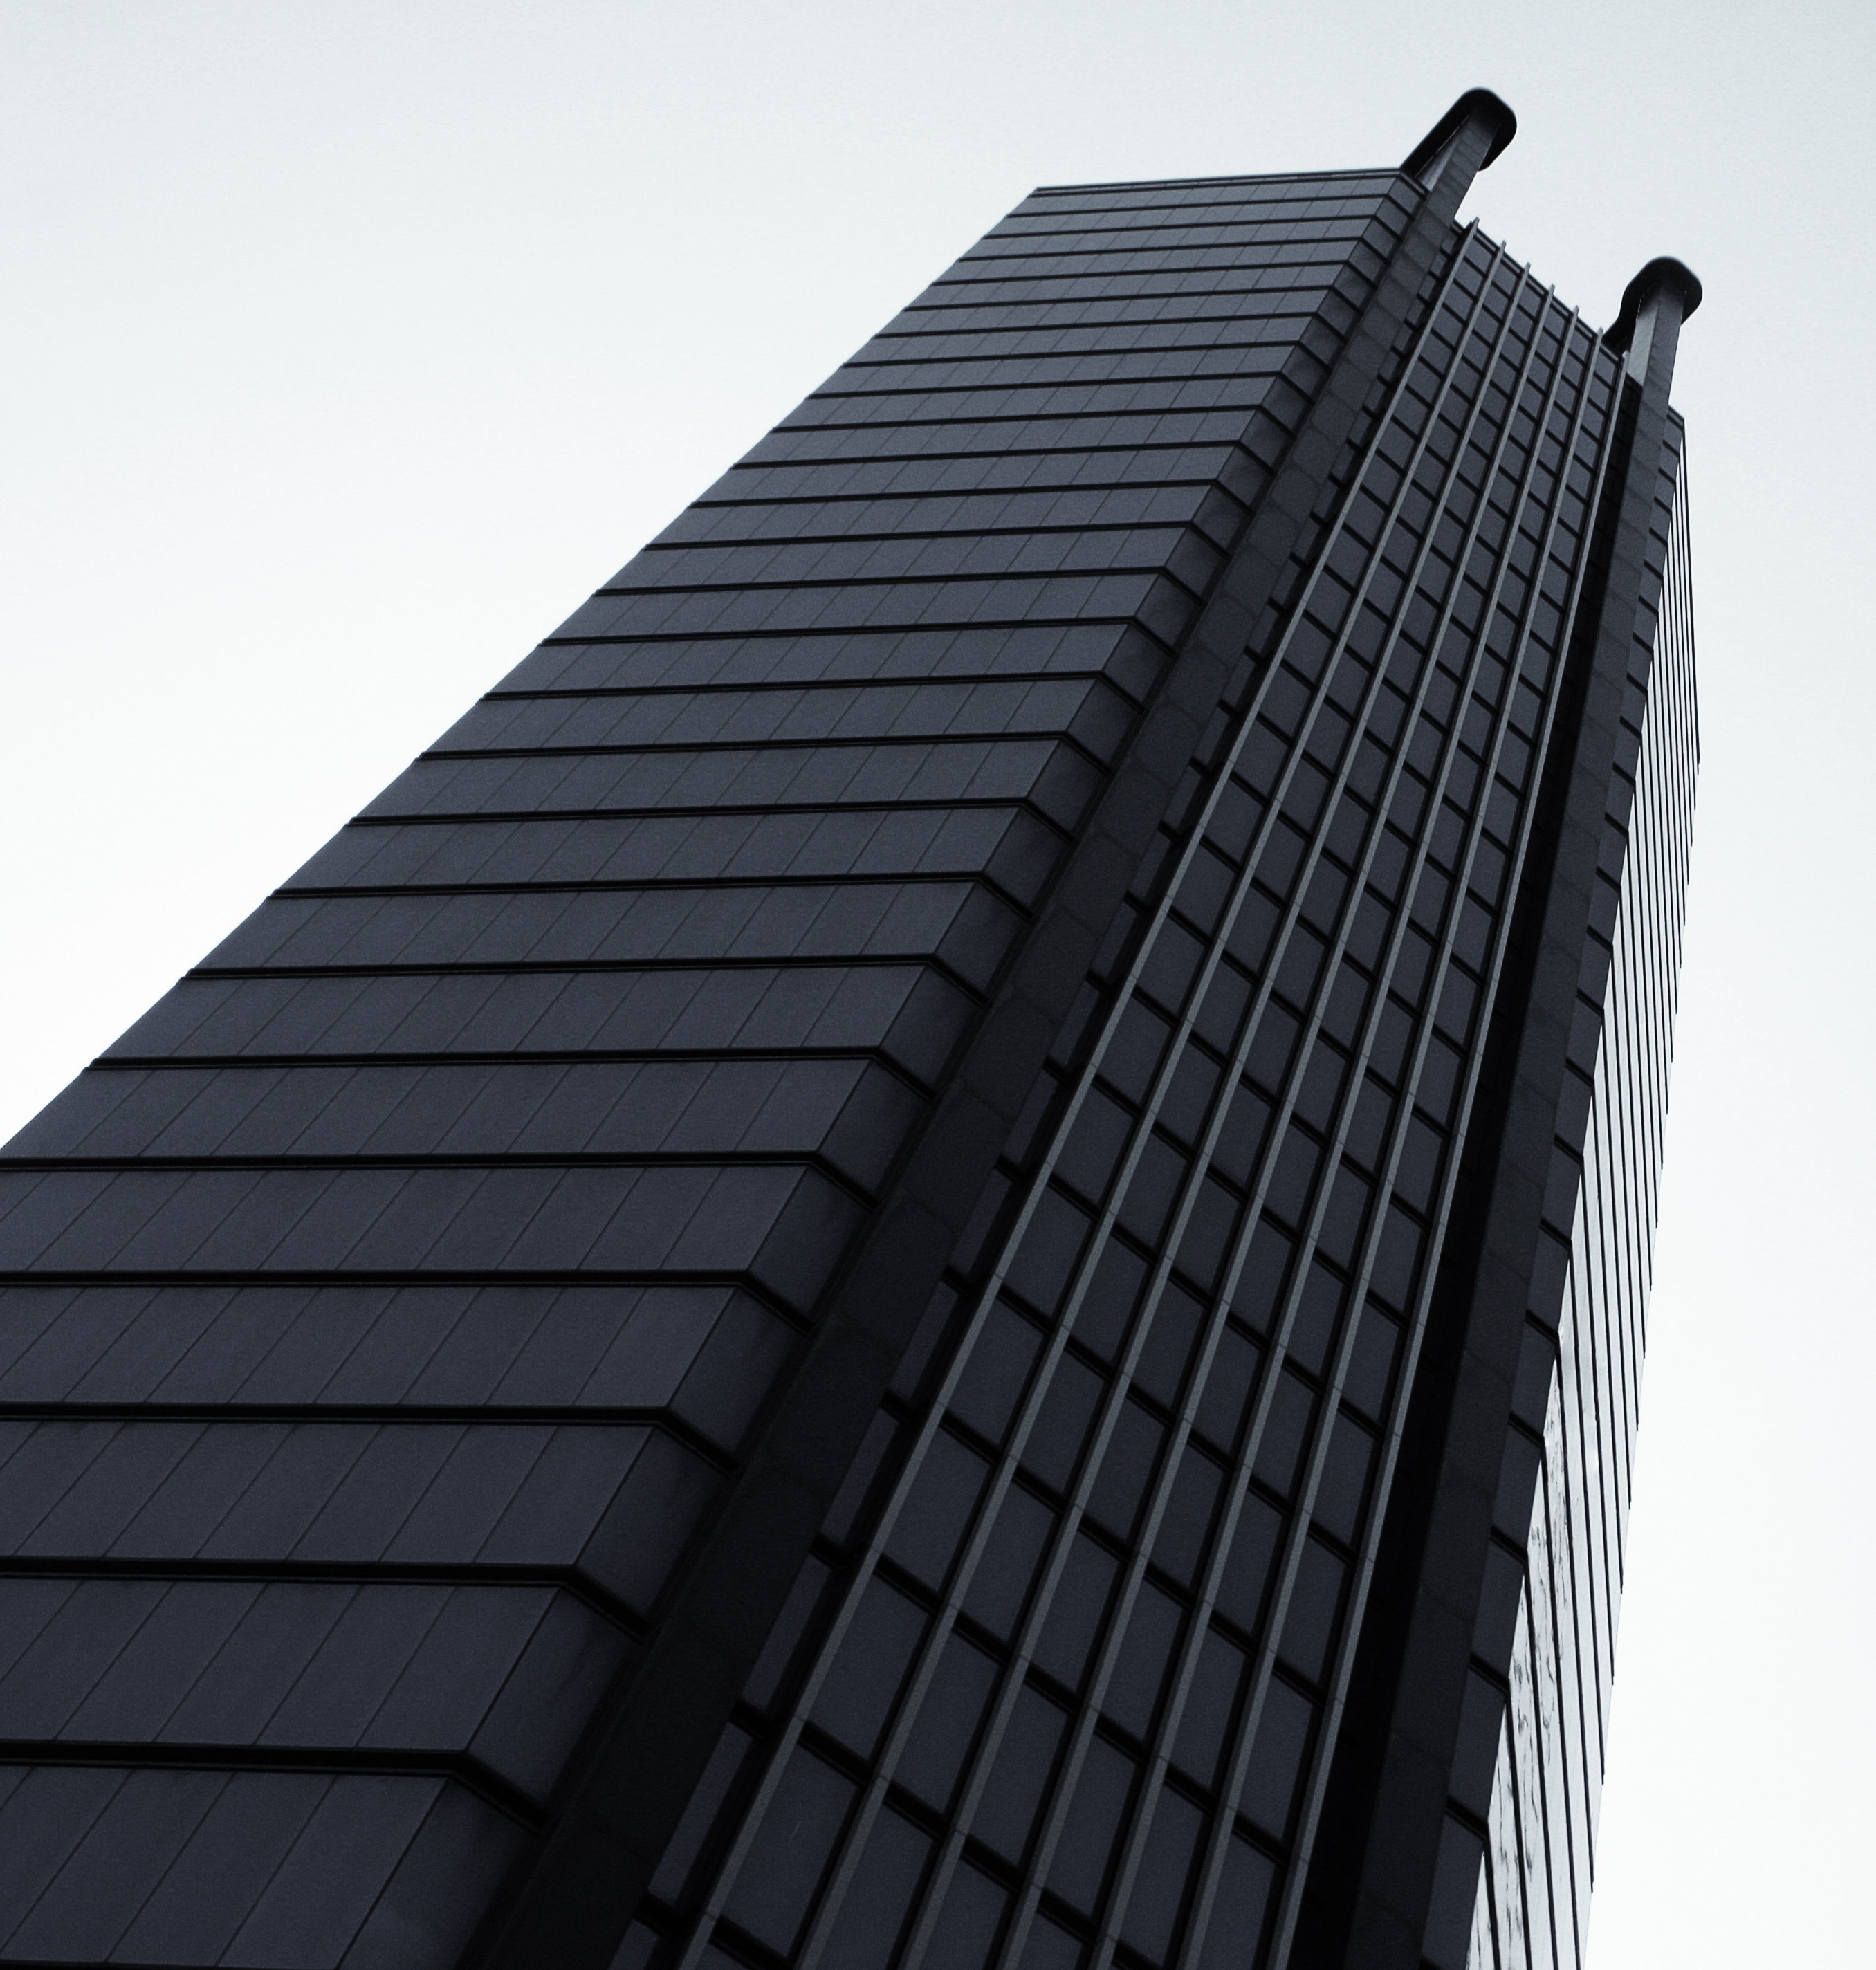 black high rise building